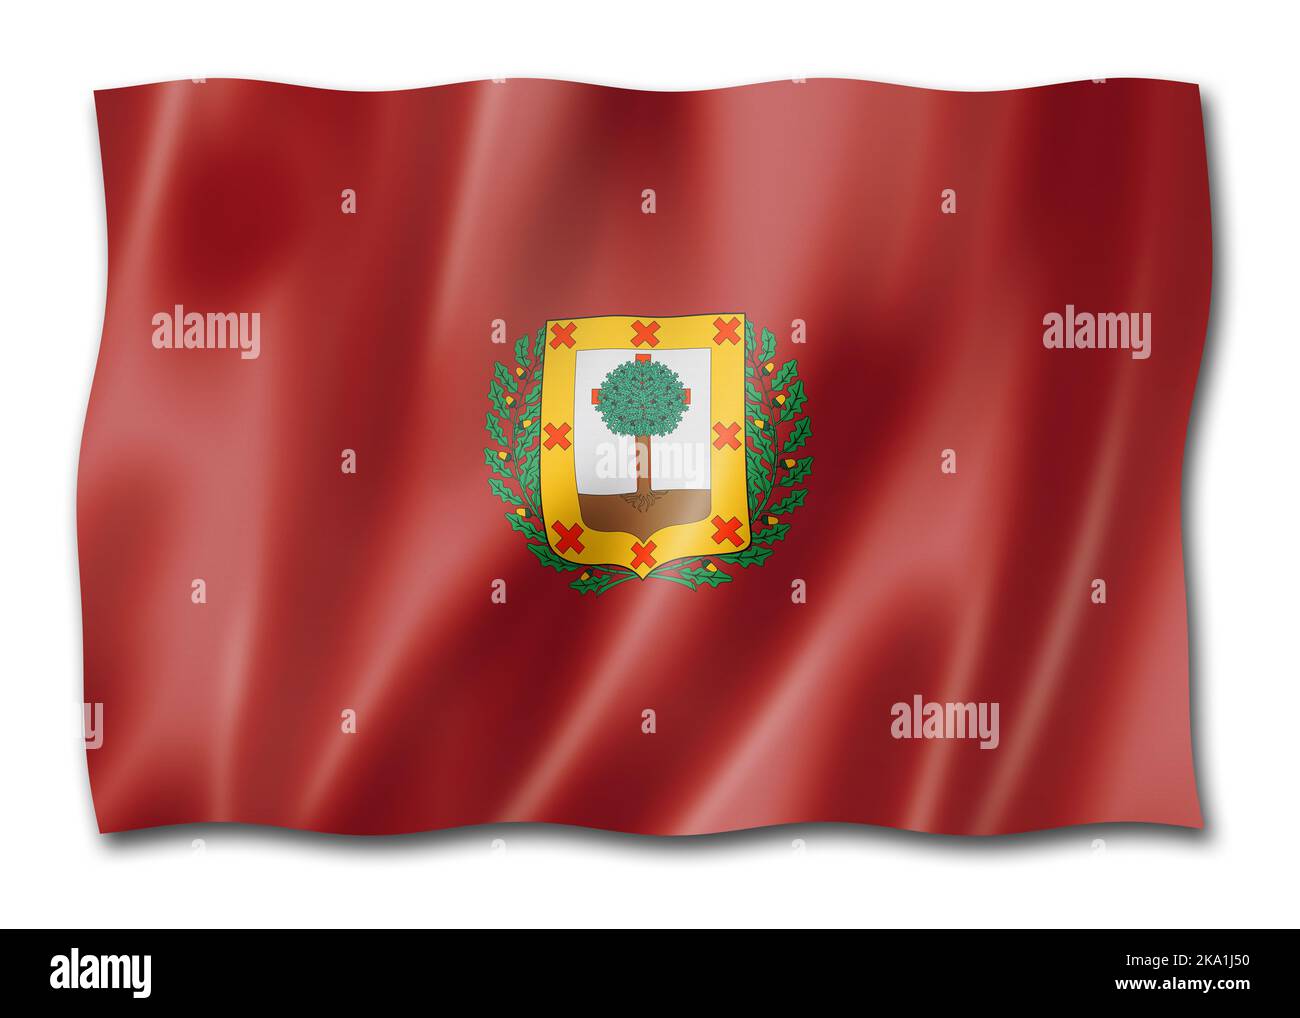 Vizcaya province flag, Spain waving banner collection. 3D illustration Stock Photo